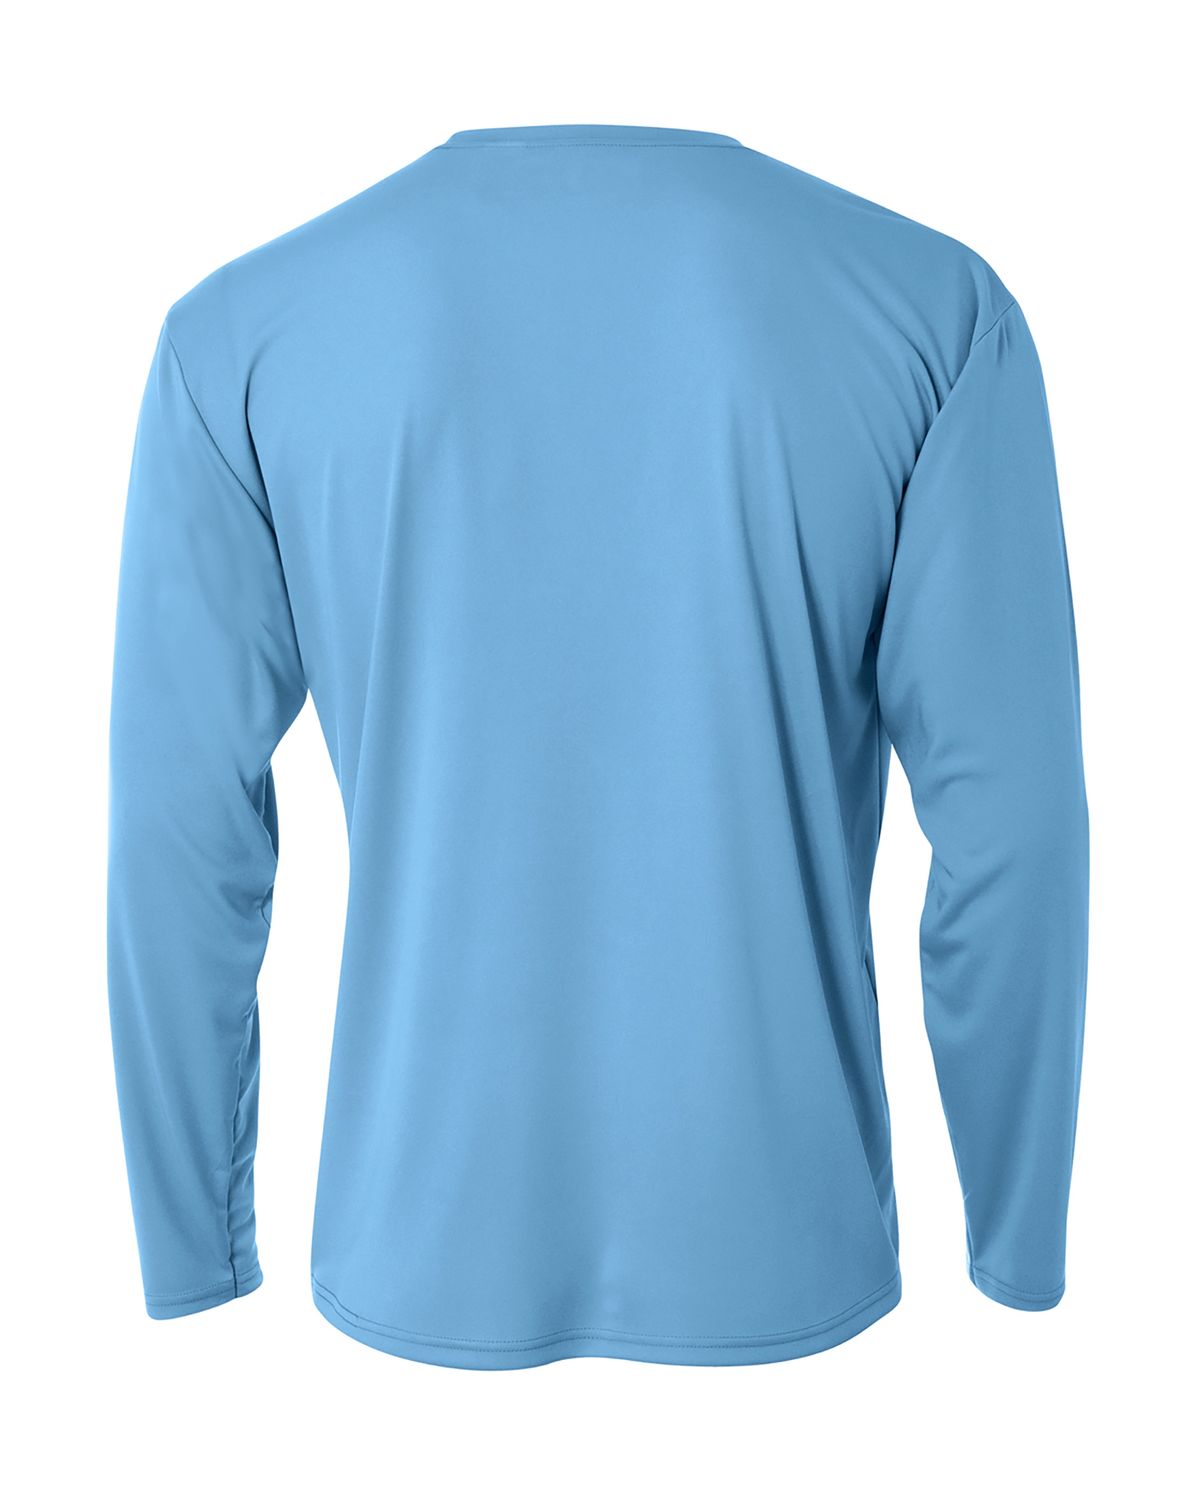 A4 Men's Cooling Performance Long Sleeve T-Shirt - N3165